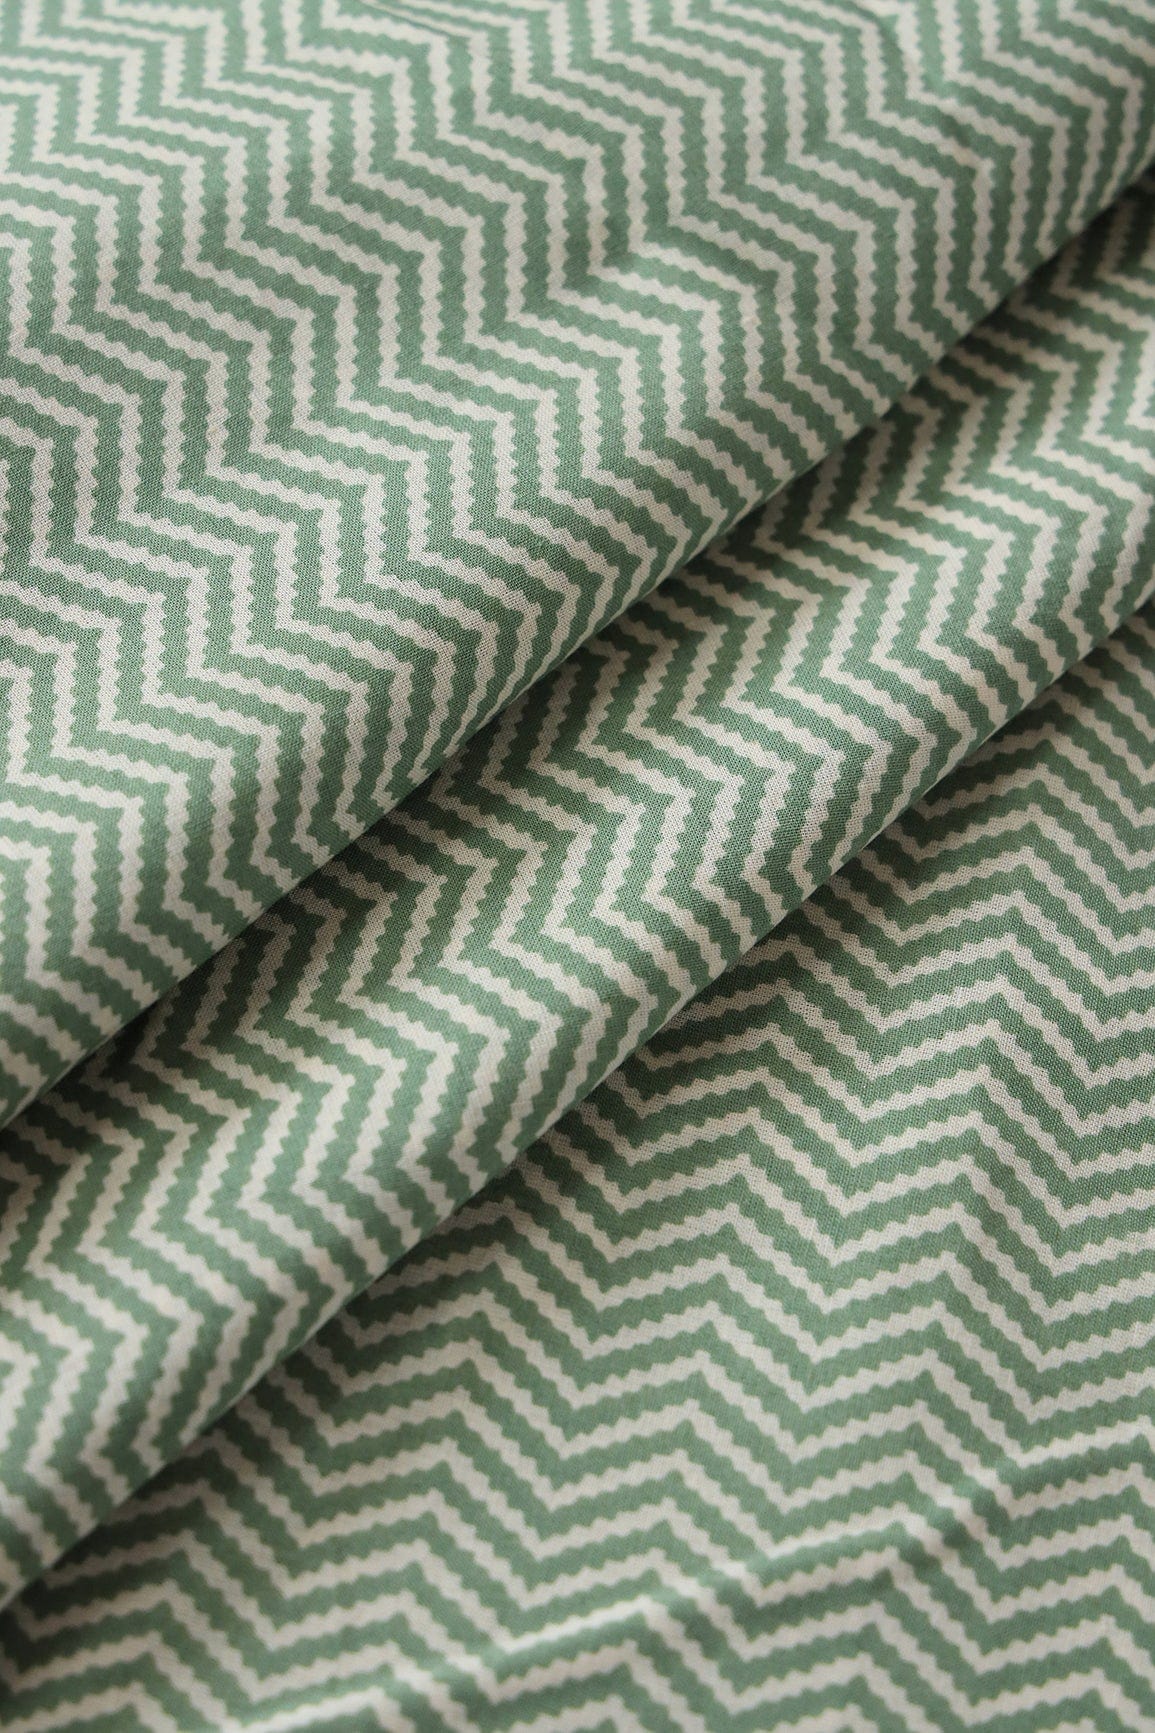 doeraa Prints Olive Green And Cream Chevron Print On Pure Cotton Fabric